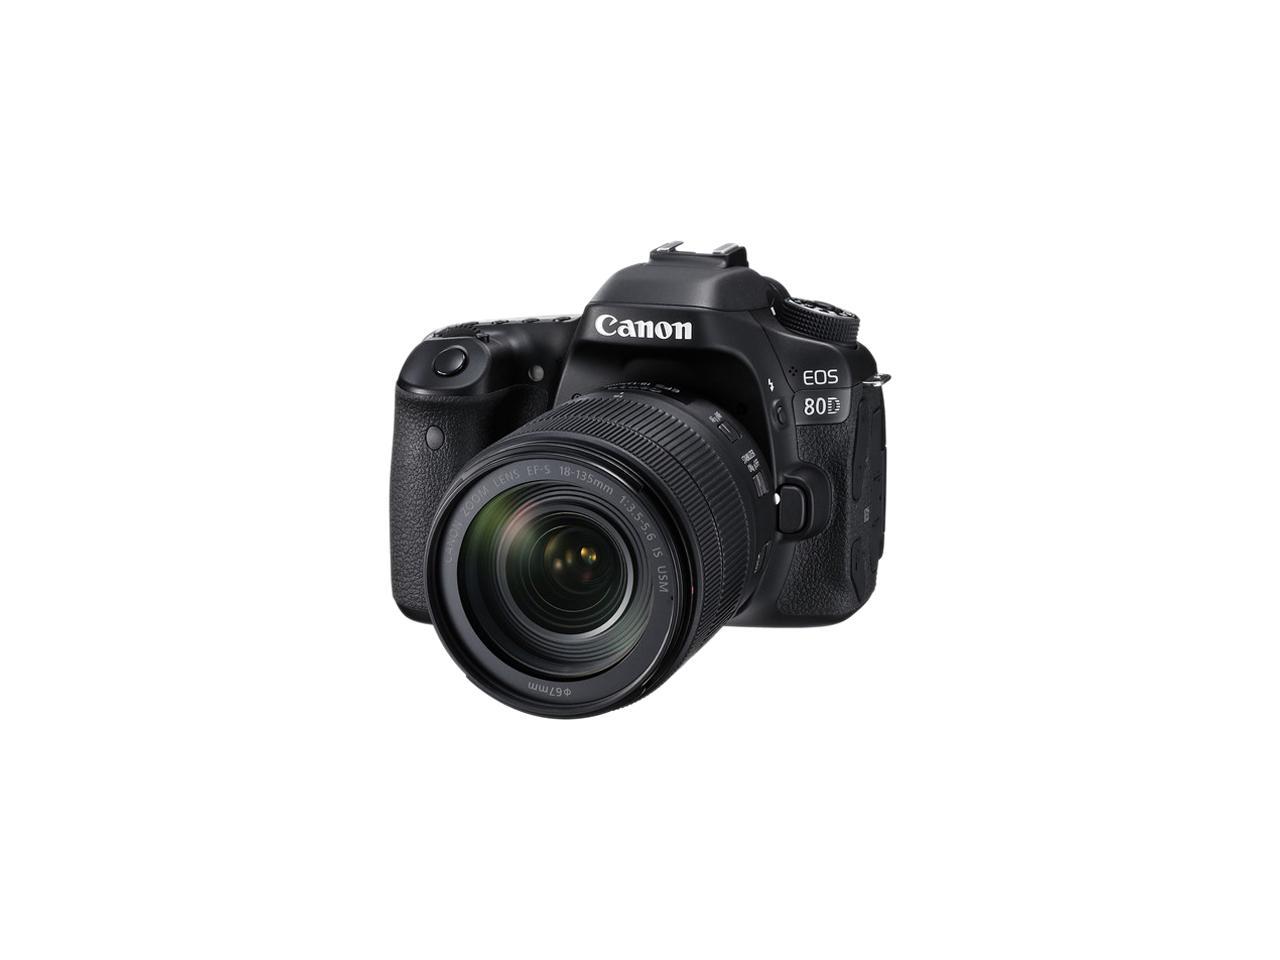 Canon EOS 80D 1263C006 Black Digital SLR Camera with 18-135mm IS USM Lens KIT